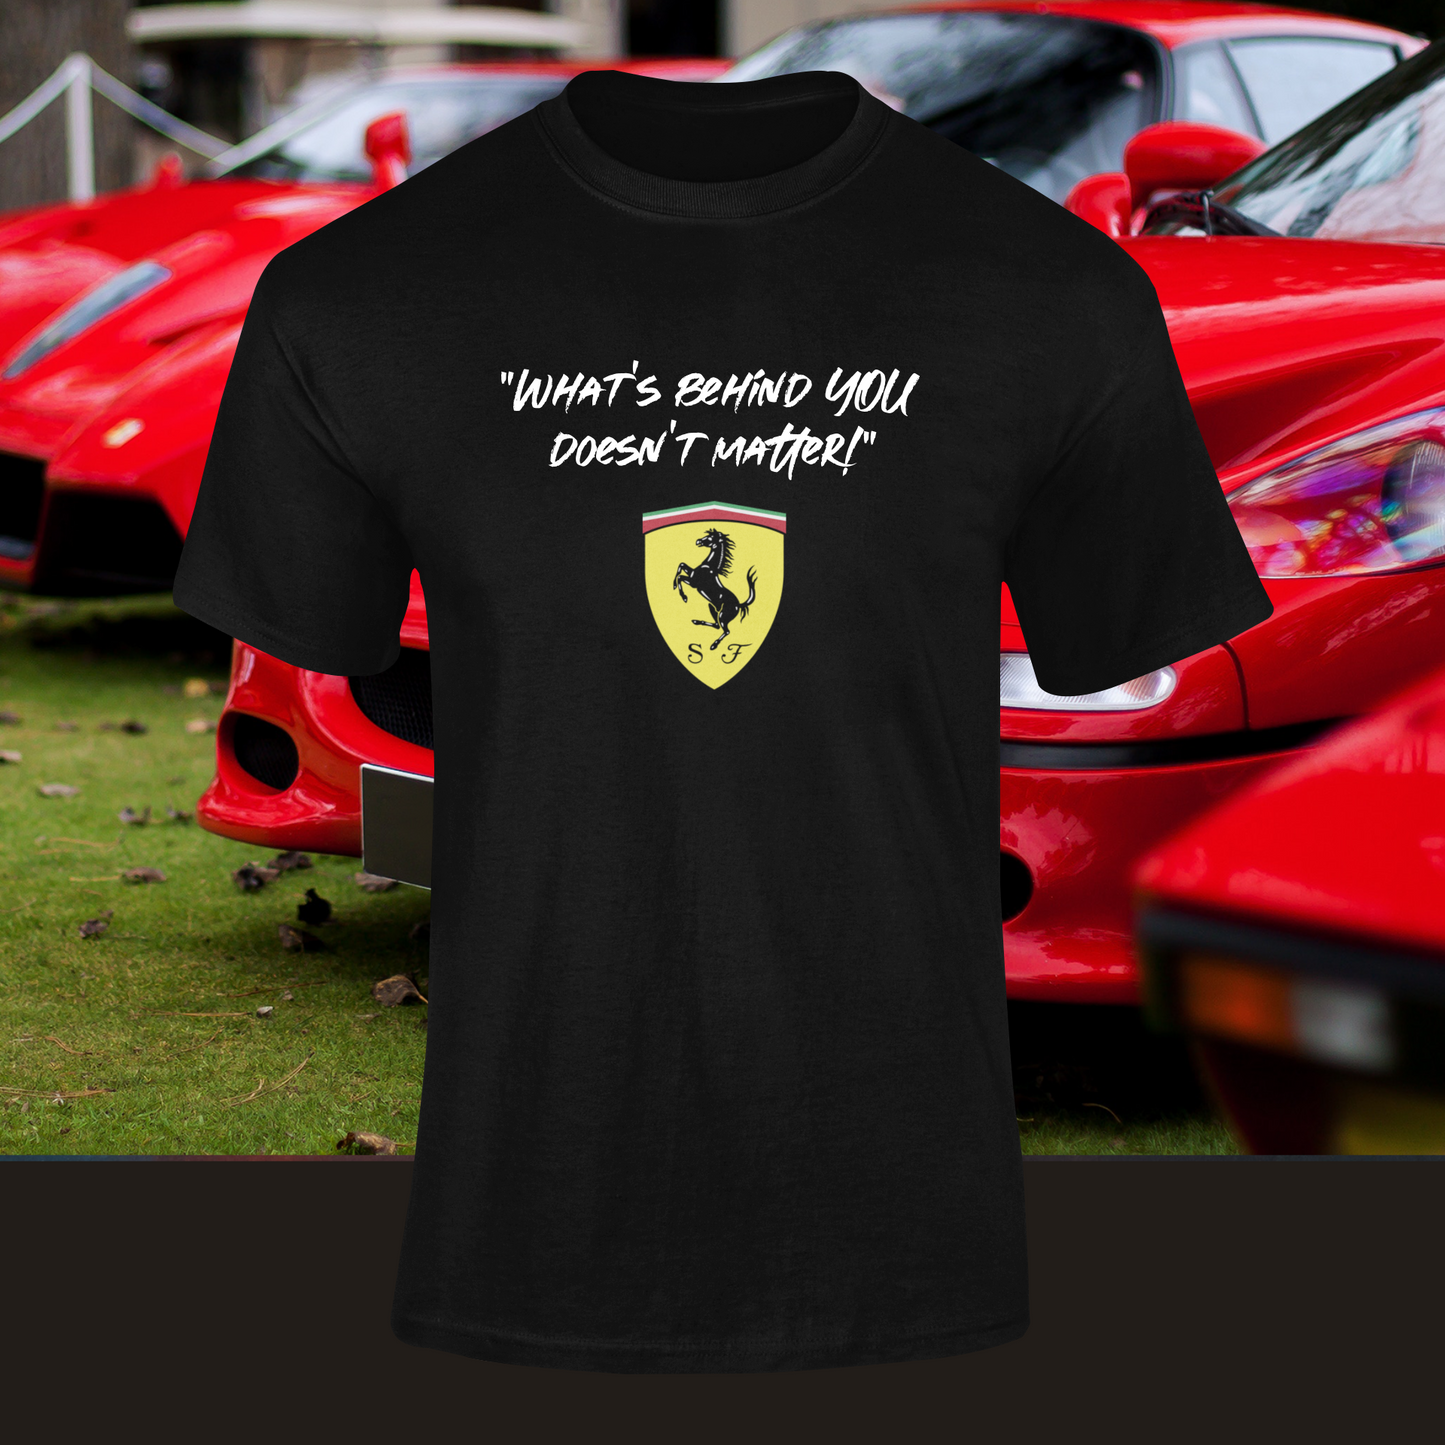 Ferrari T-shirt